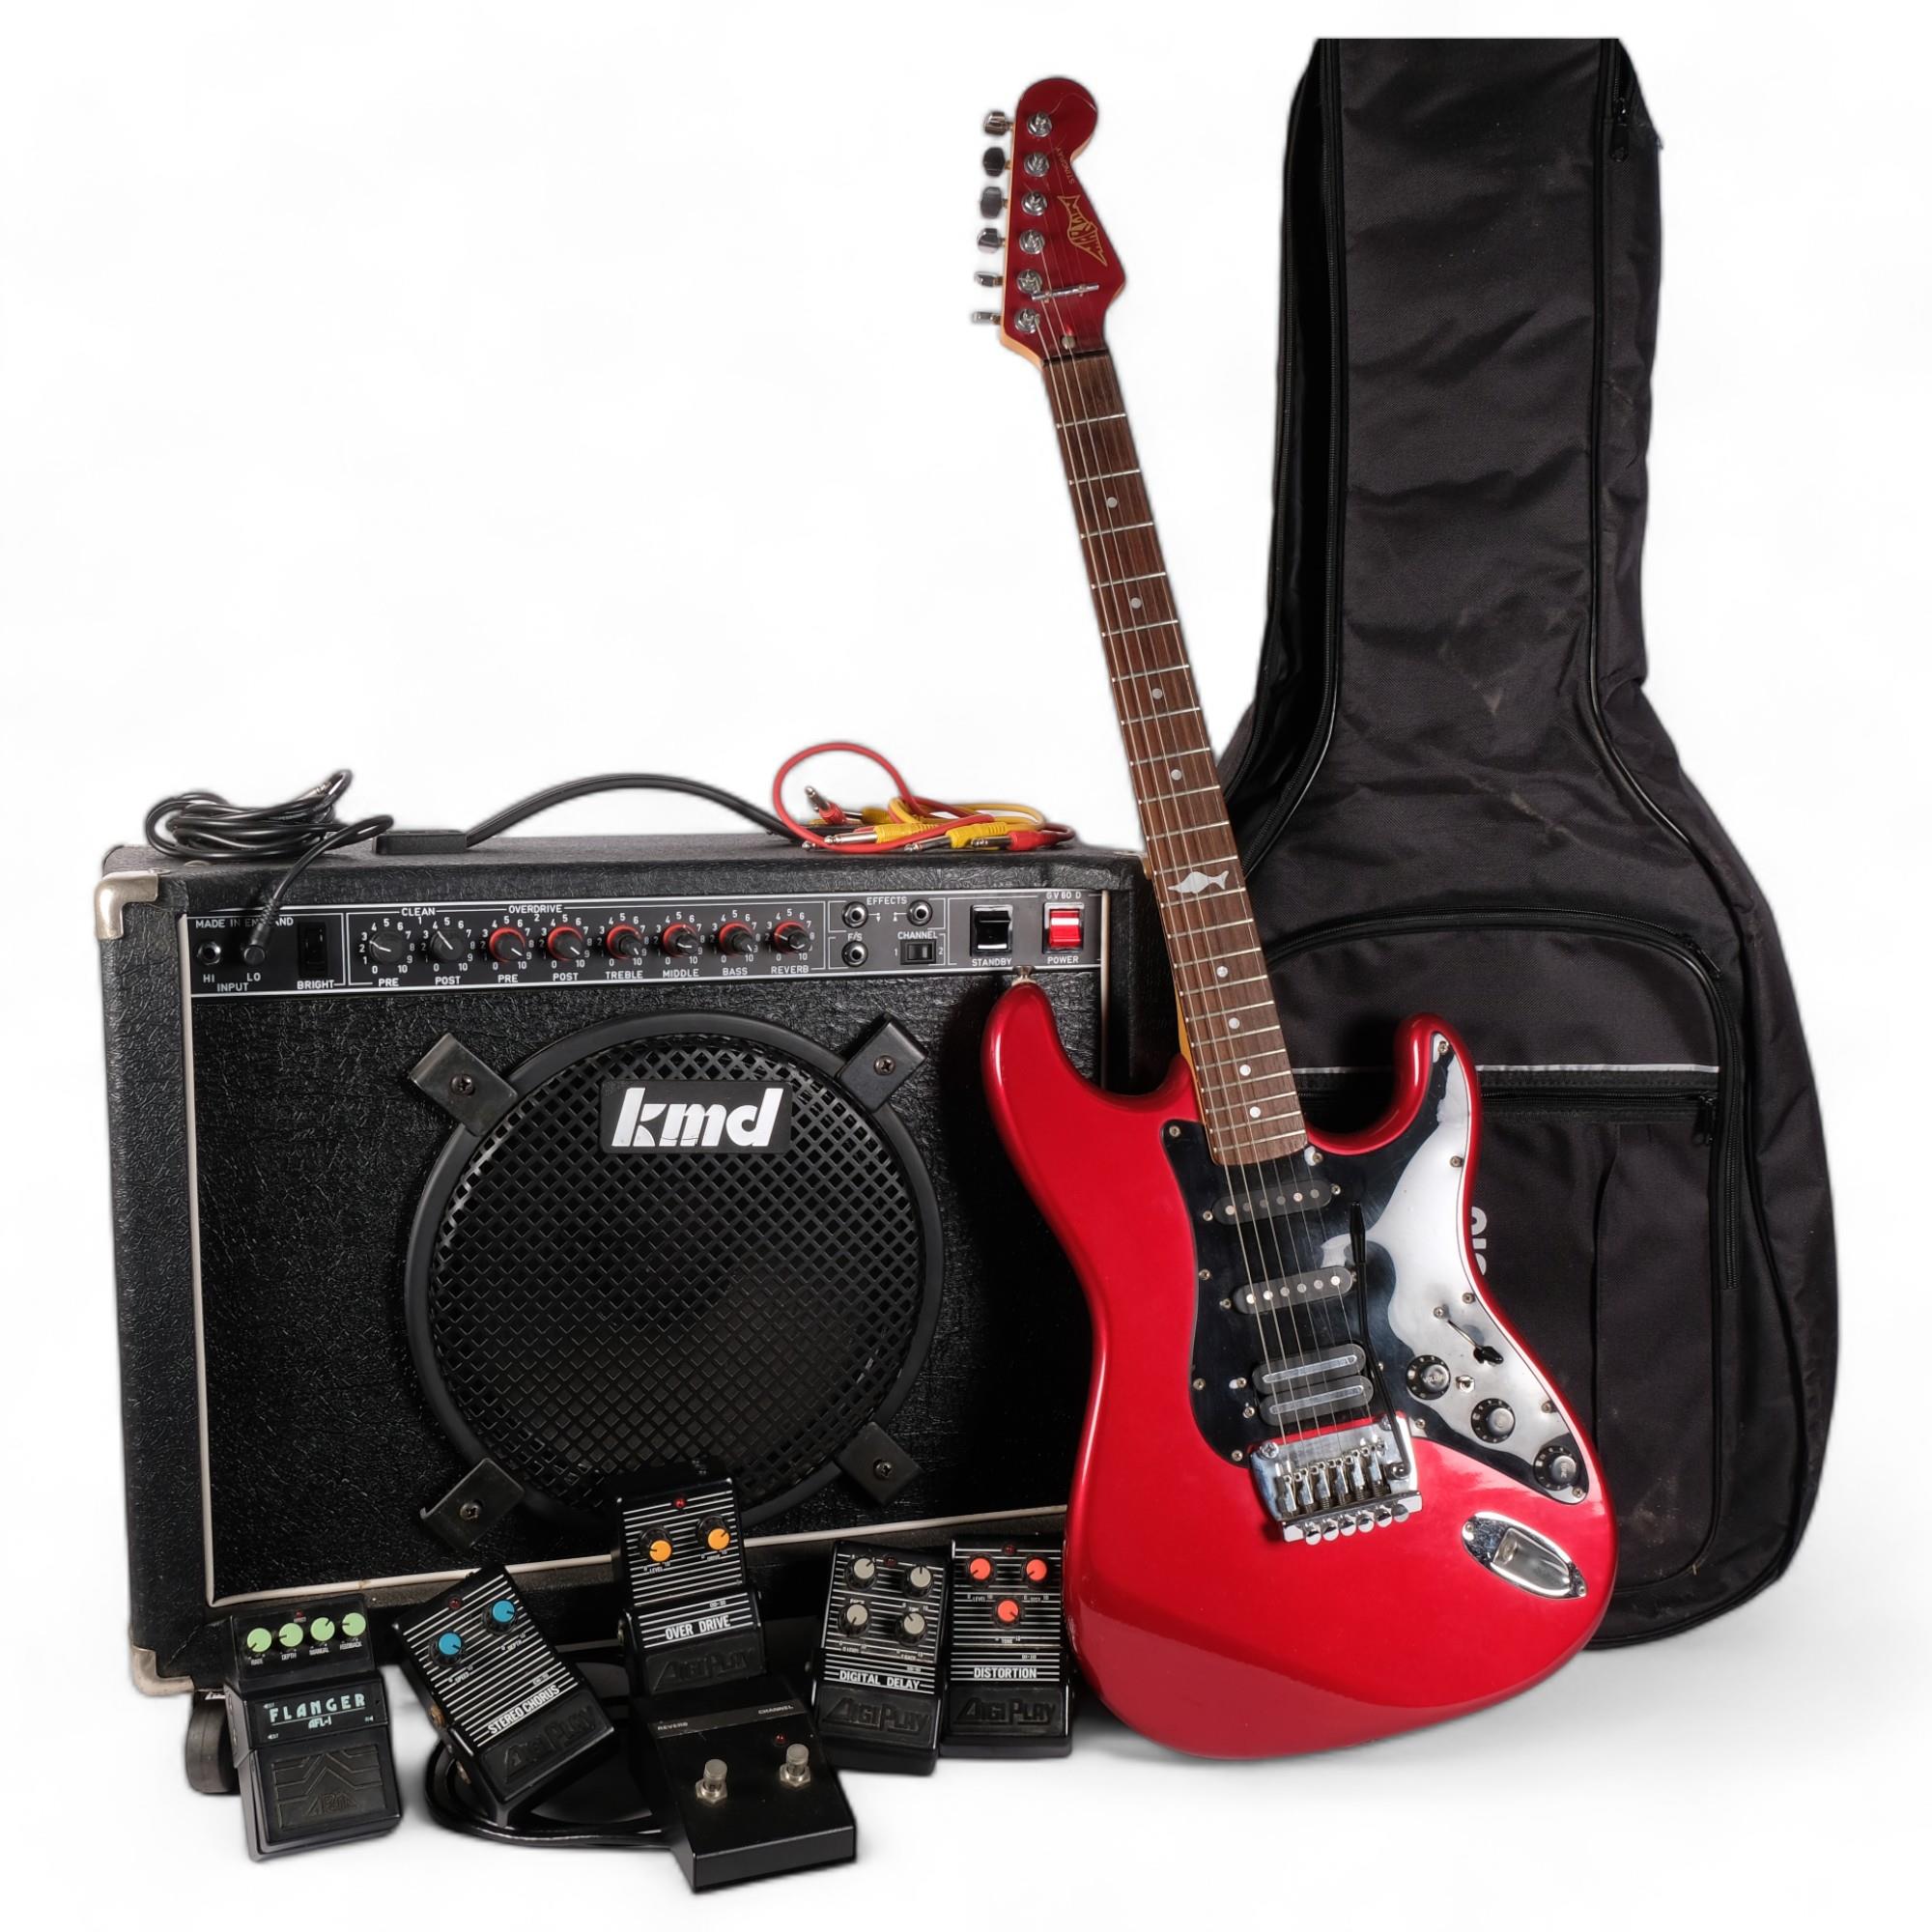 A Marlin Stingray "Superstratocaster" electric guitar, model K36, serial no. E717092, and a KMD